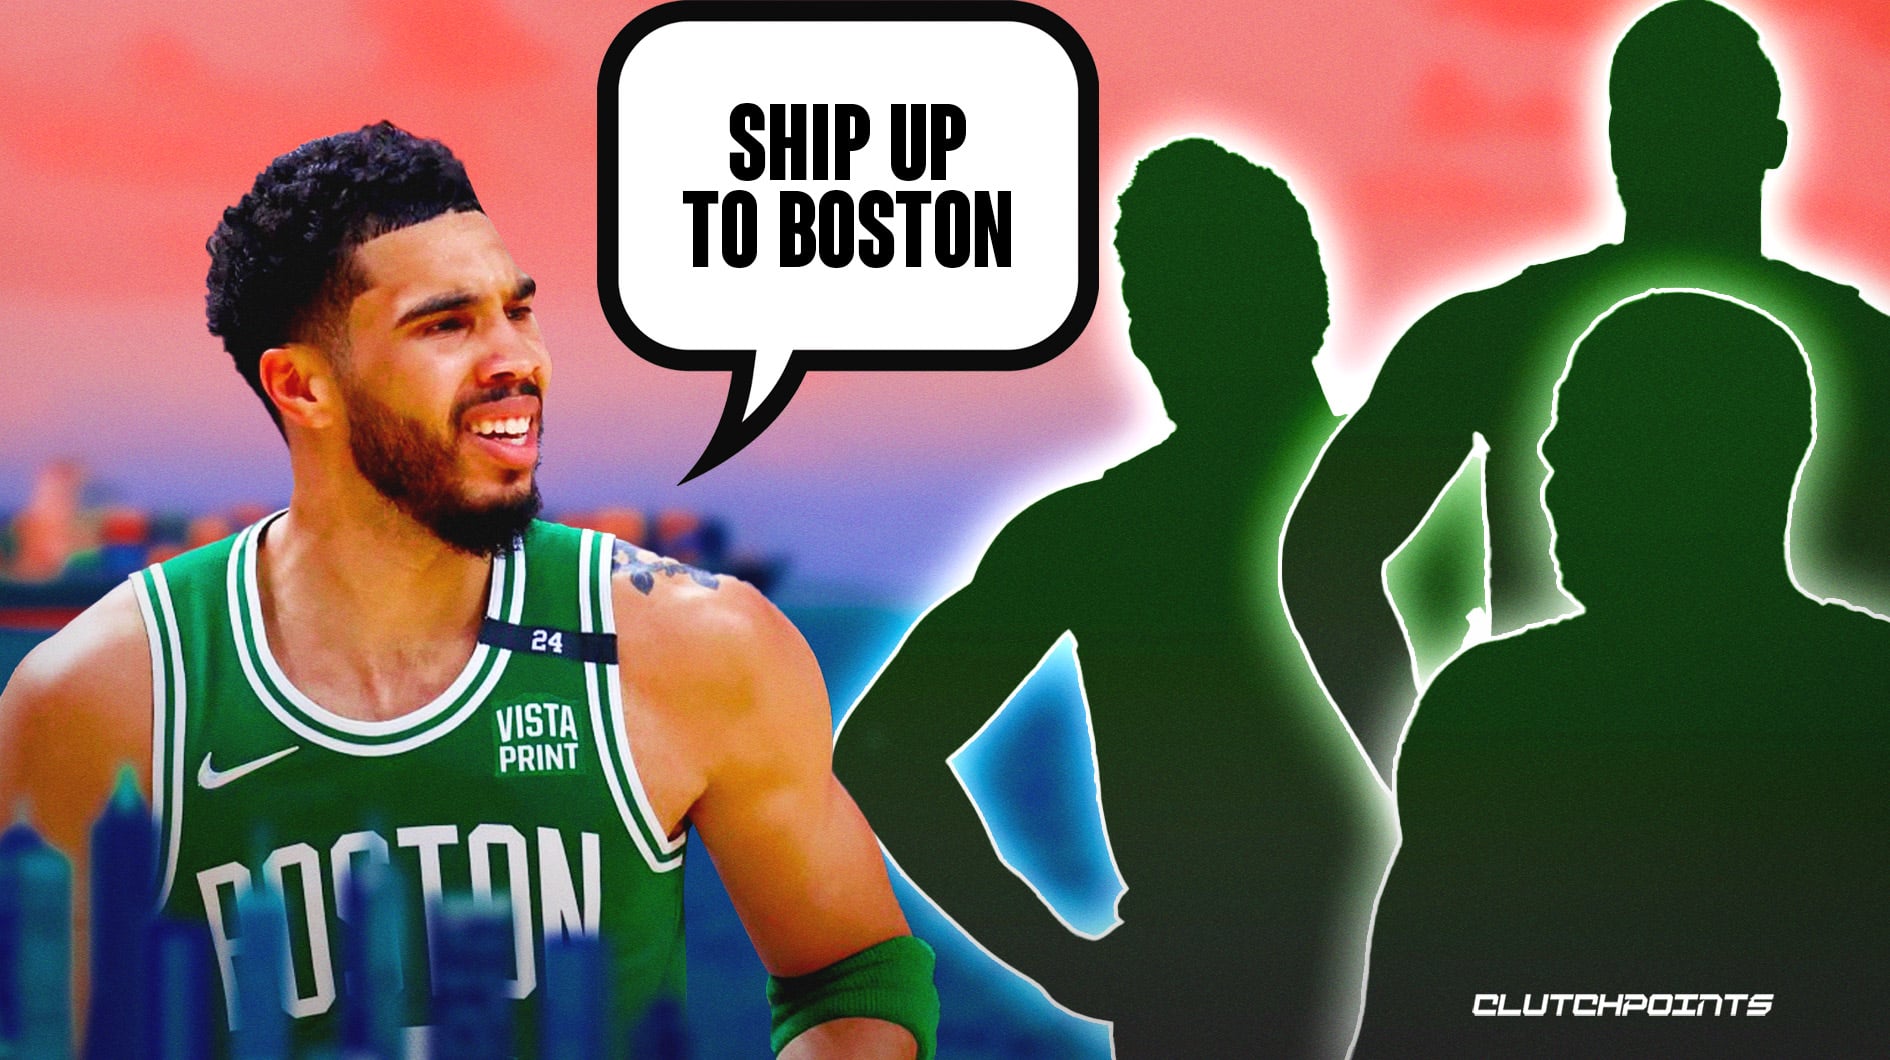 Boston Celtics have a new face among league's top-five jersey sales